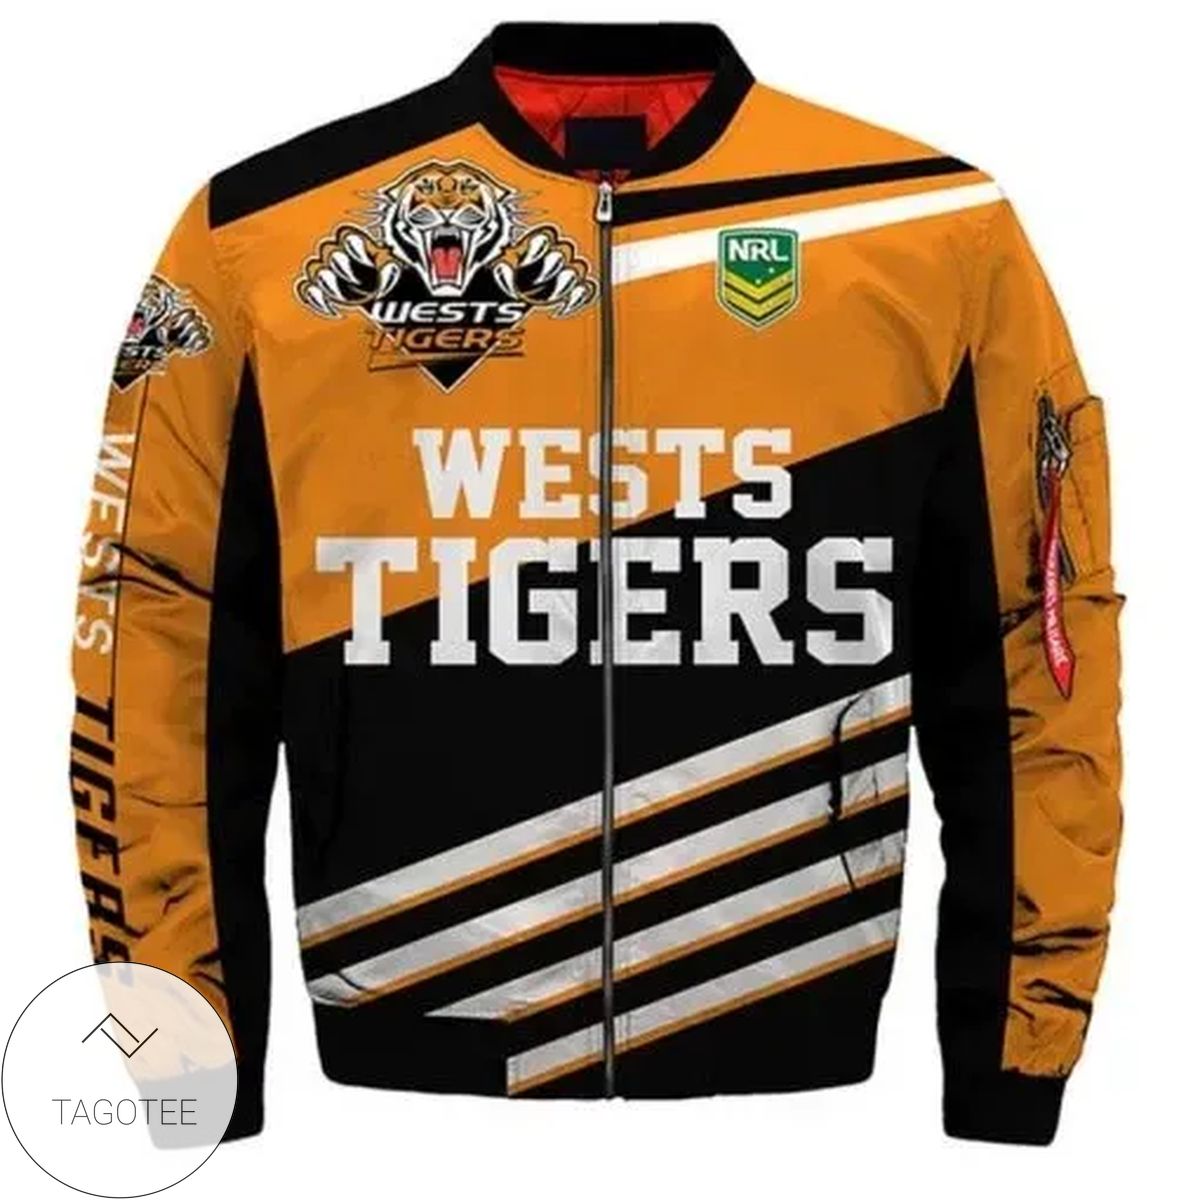 Wests Tigers 3d Printed Unisex Bomber Jacket